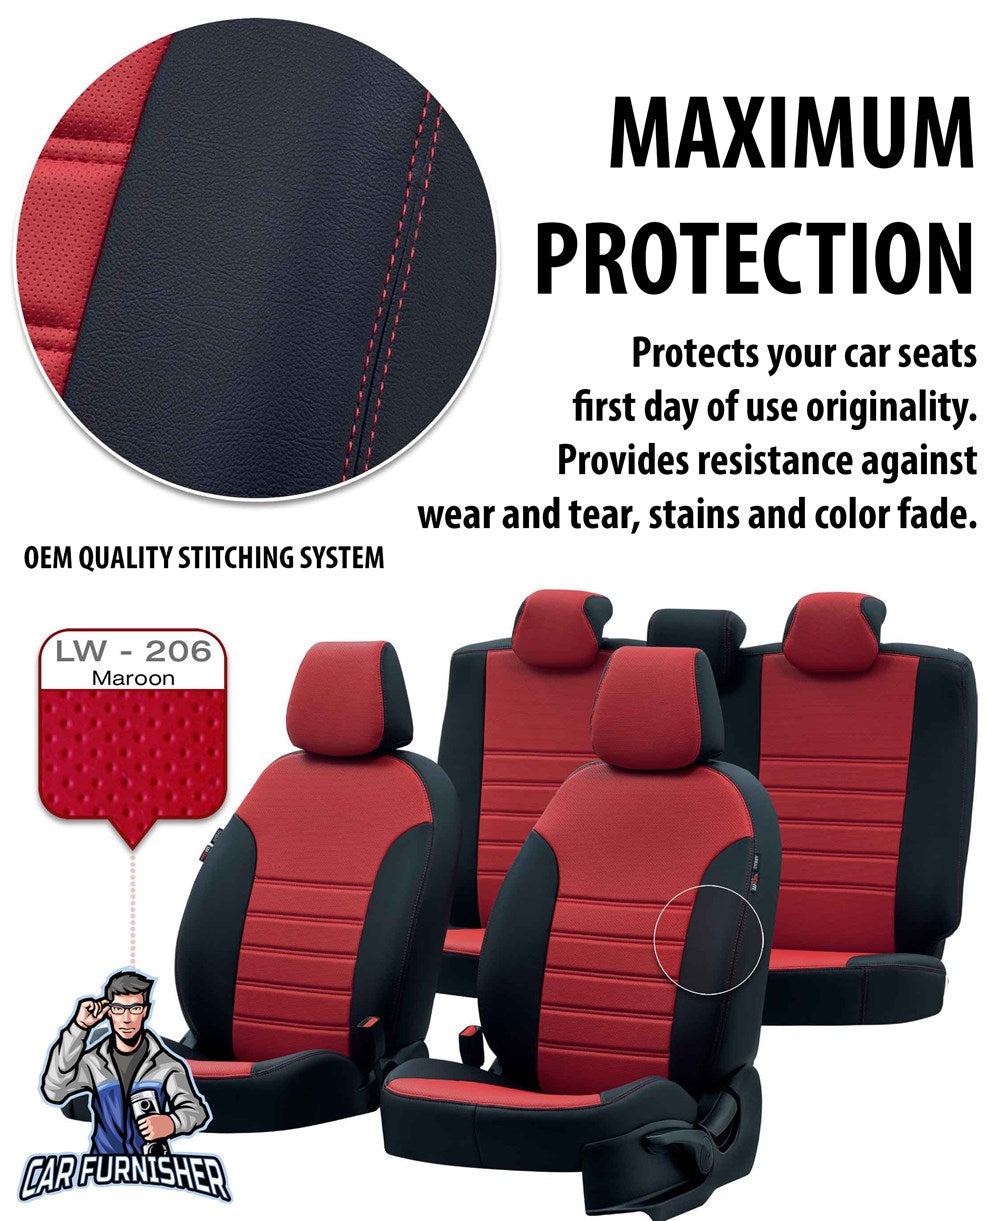 Subaru Legacy Seat Cover Istanbul Leather Design Black Leather